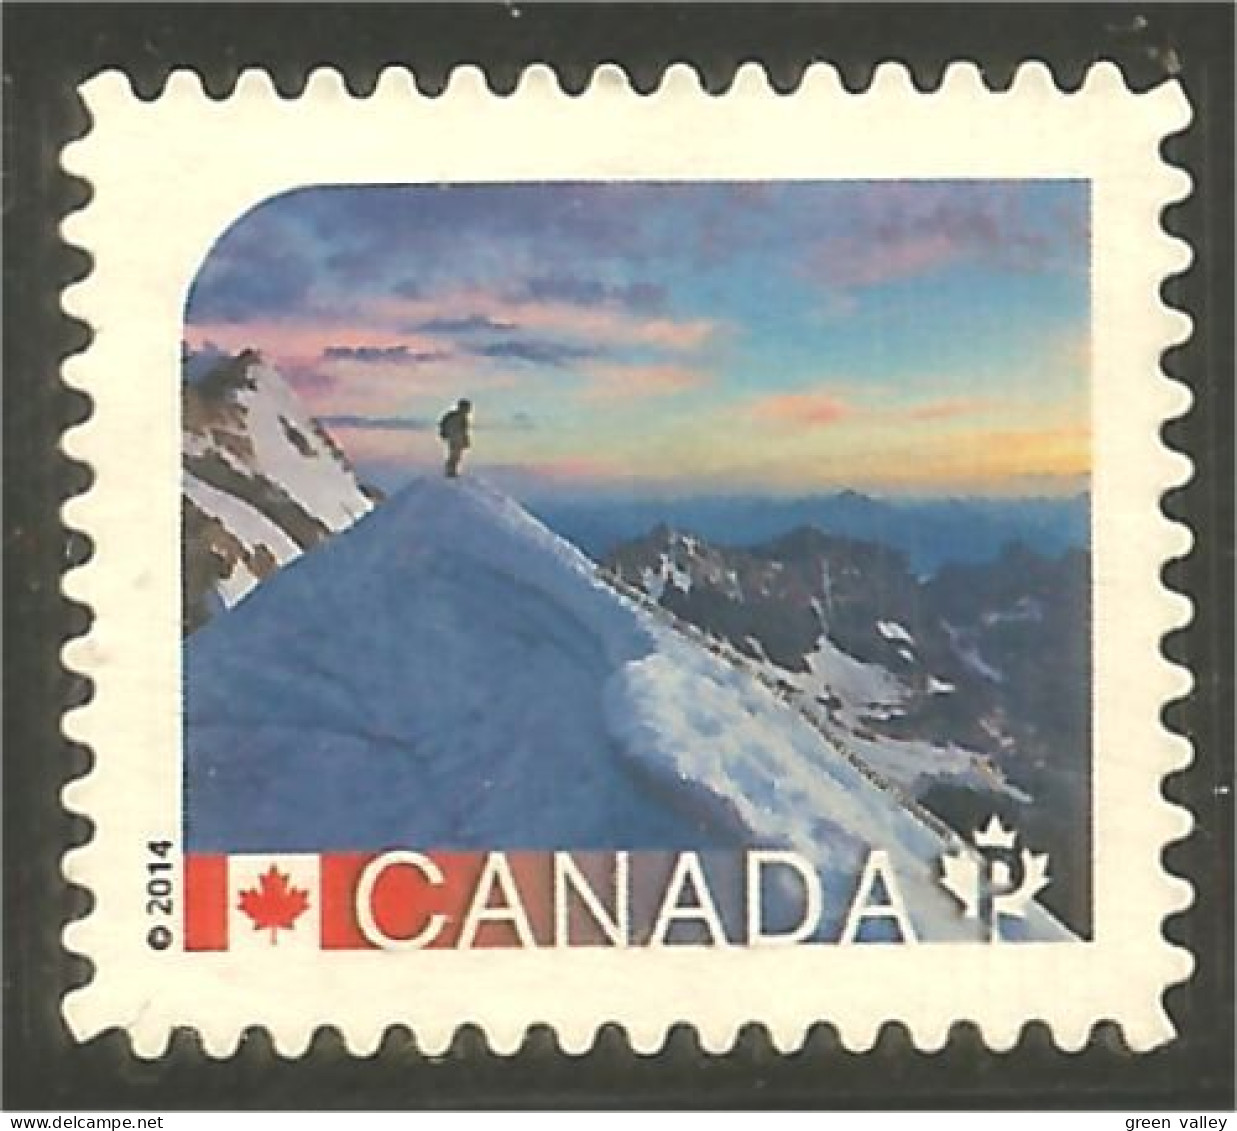 Canada Alpinisme Montagne Escalade Mountain Climbing Mint No Gum (309b) - Klimmen